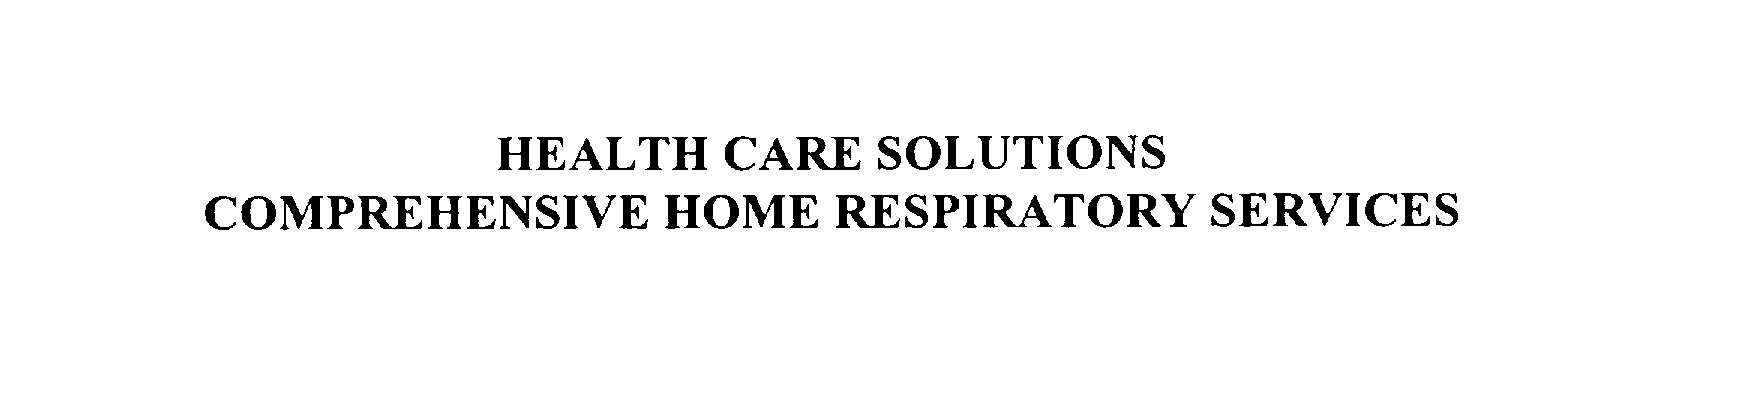  HEALTH CARE SOLUTIONS COMPREHENSIVE HOME RESPIRATORY SERVICES